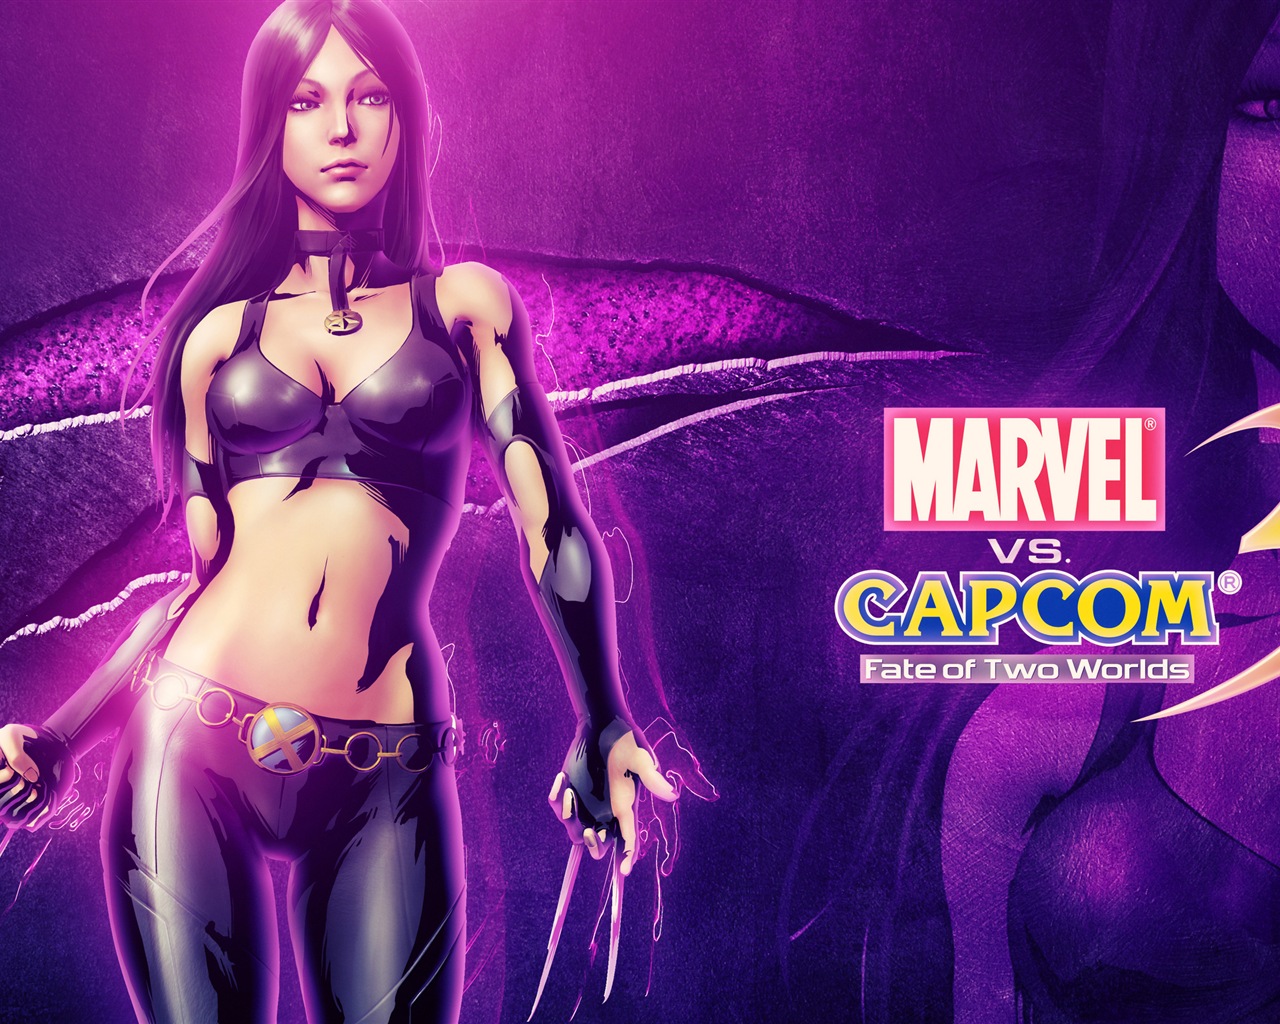 Marvel VS. Capcom 3: Fate of Two Worlds 漫画英雄VS.卡普空3 高清游戏壁纸10 - 1280x1024